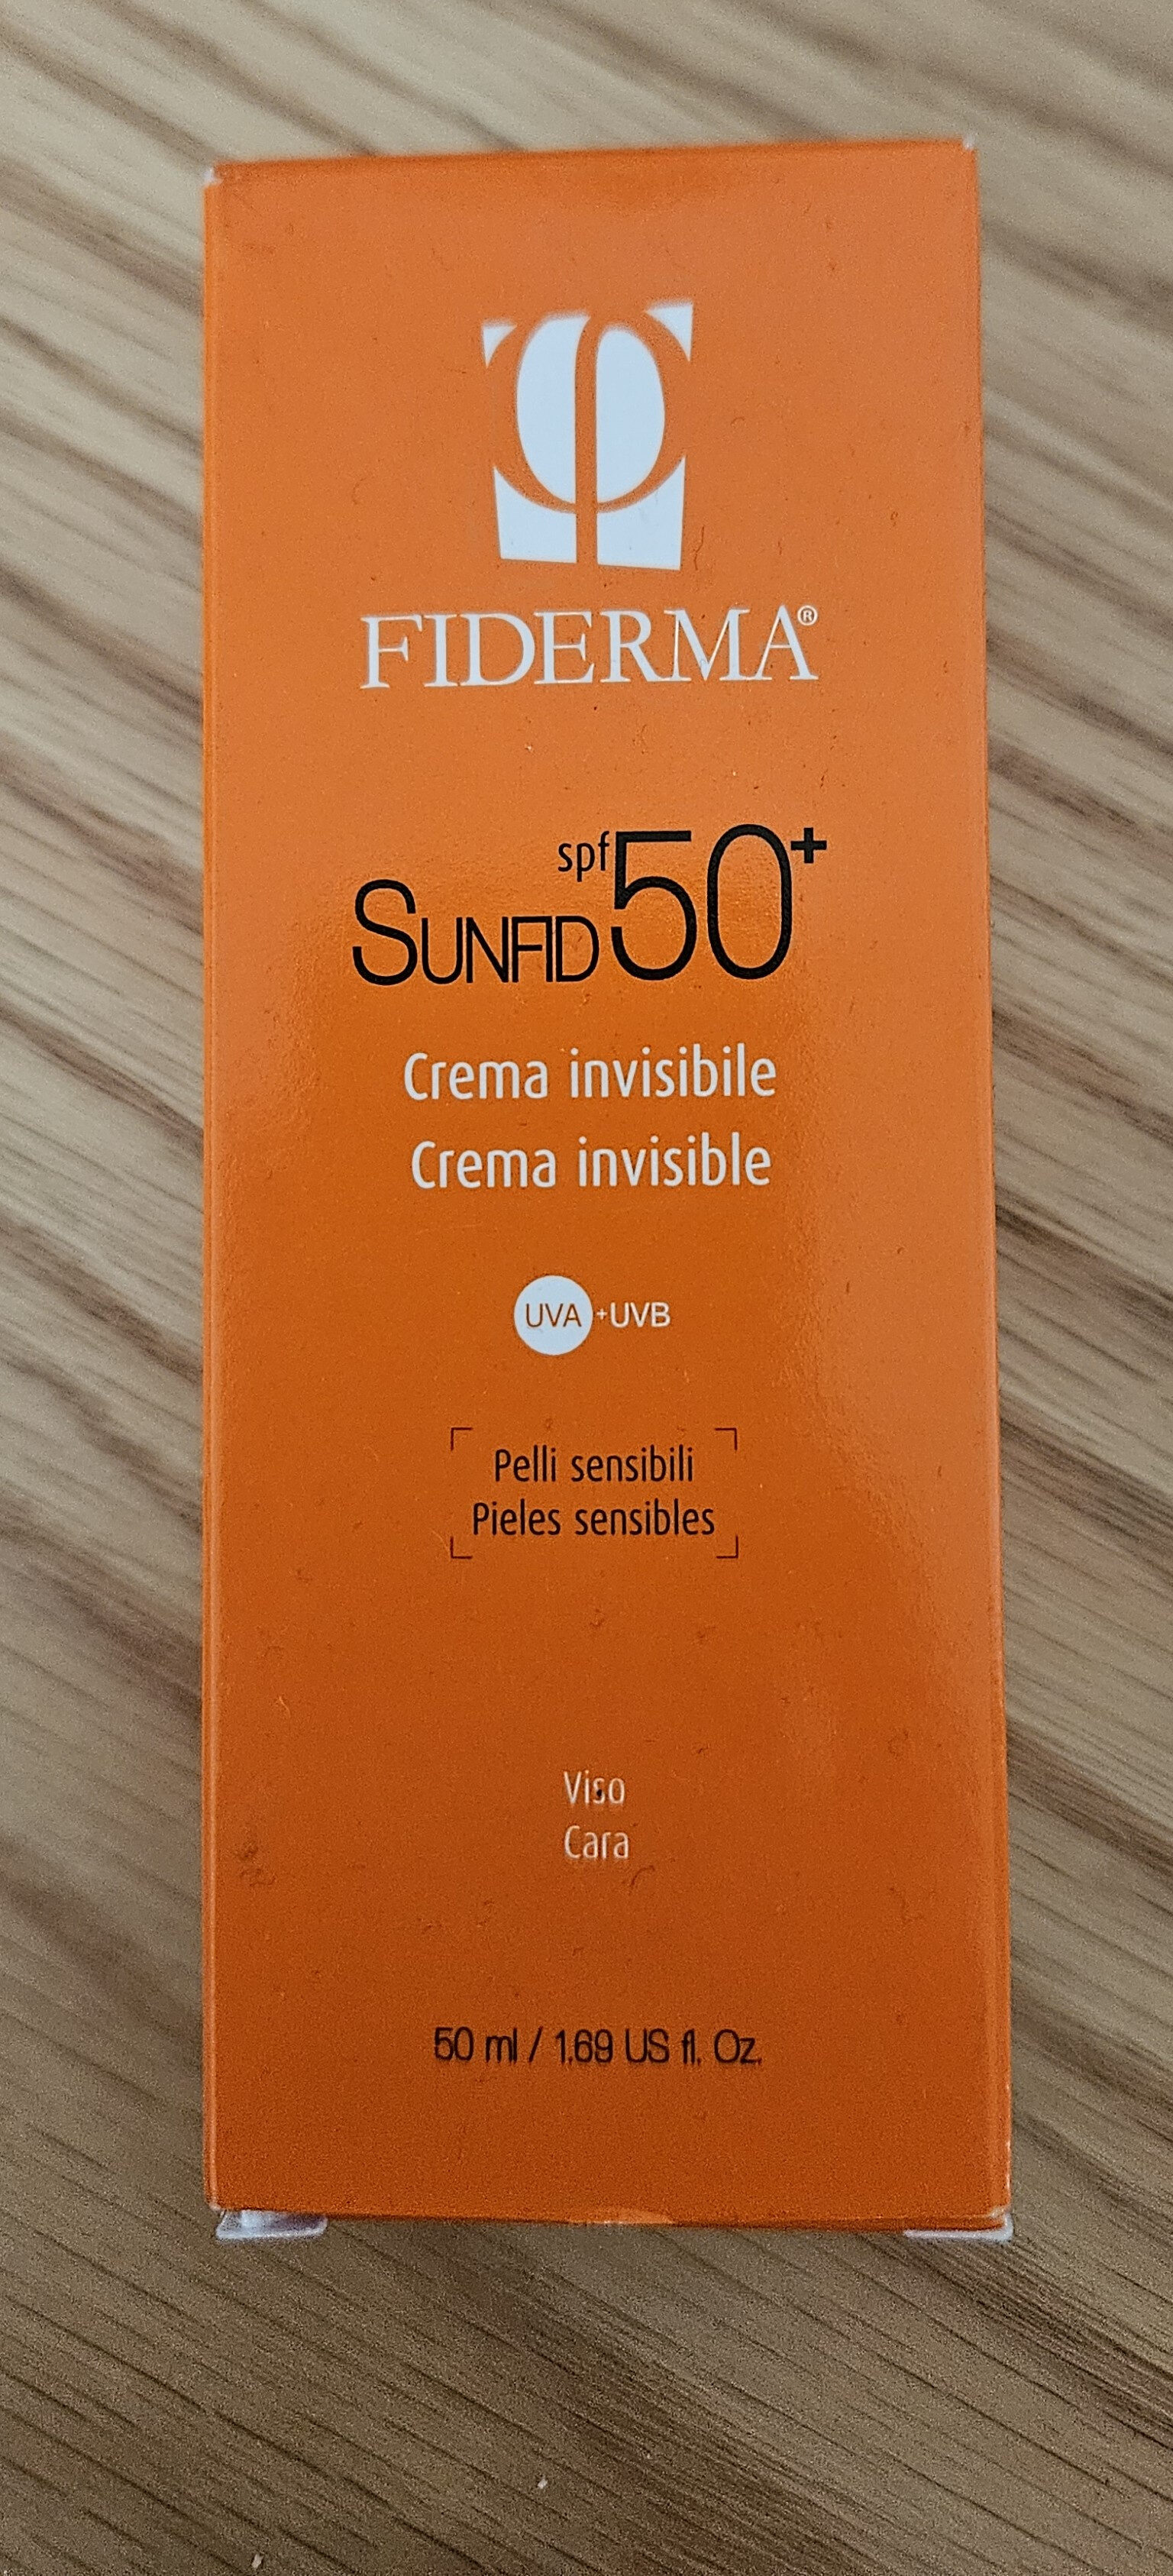 Sunfid spf50+ - Produit - en